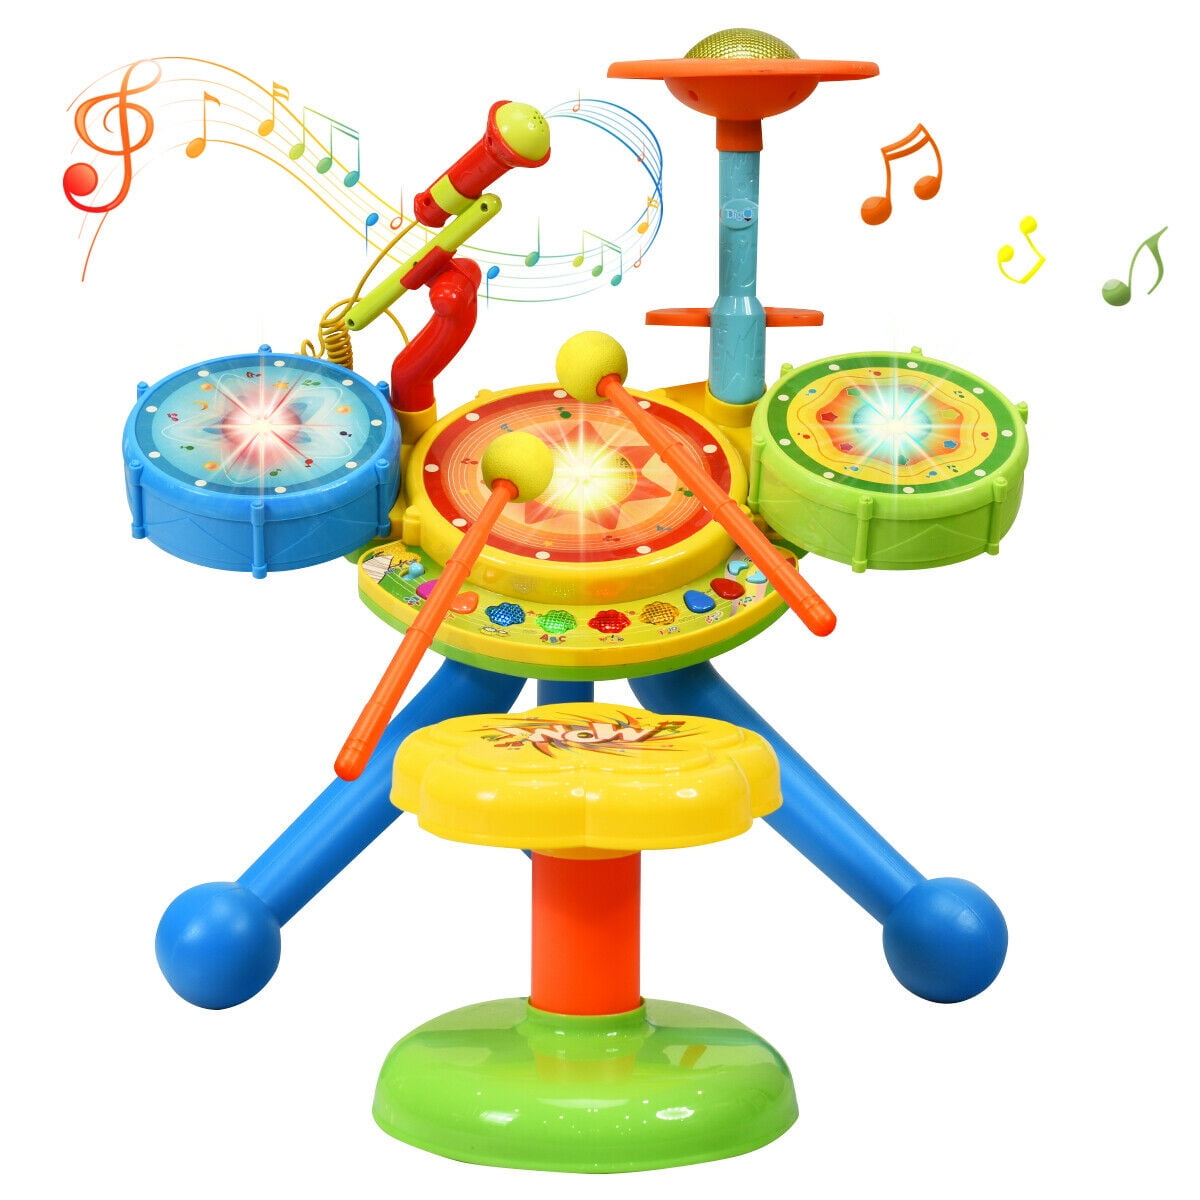 Model 1344 Blue/Orange VTech KidiBeats Learning Music Toy Drum Set 